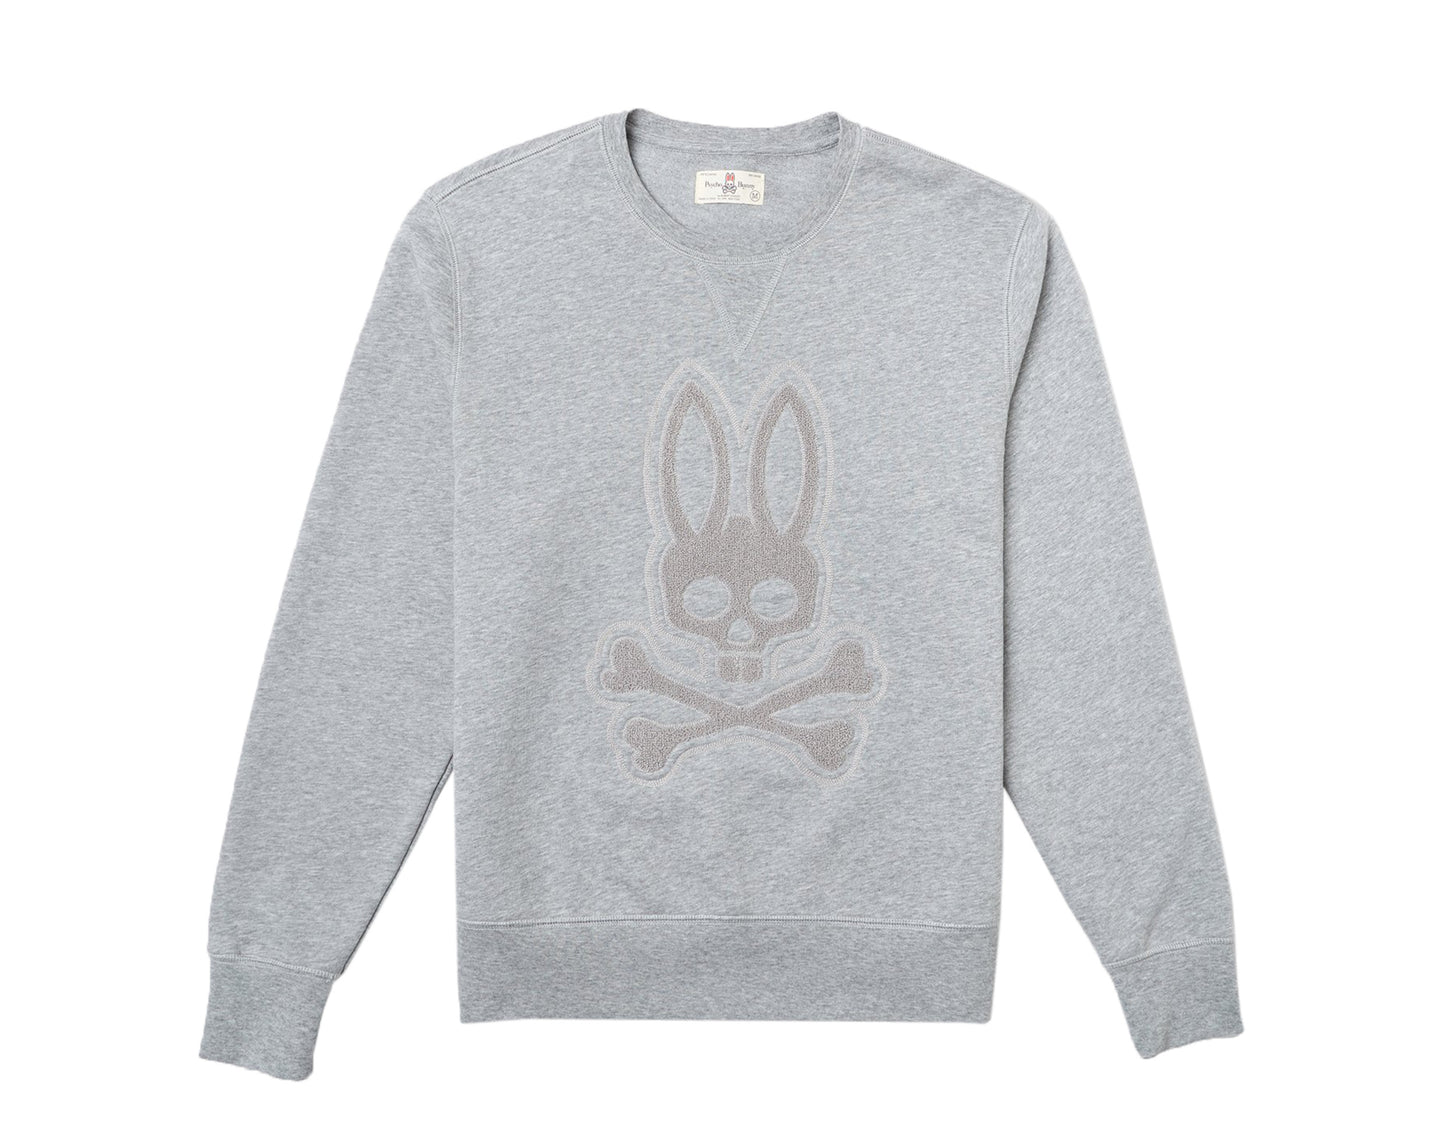 Psycho Bunny Loop Embroidered Logo Heather Grey Men's Sweatshirt B6S787B1FL-HGY